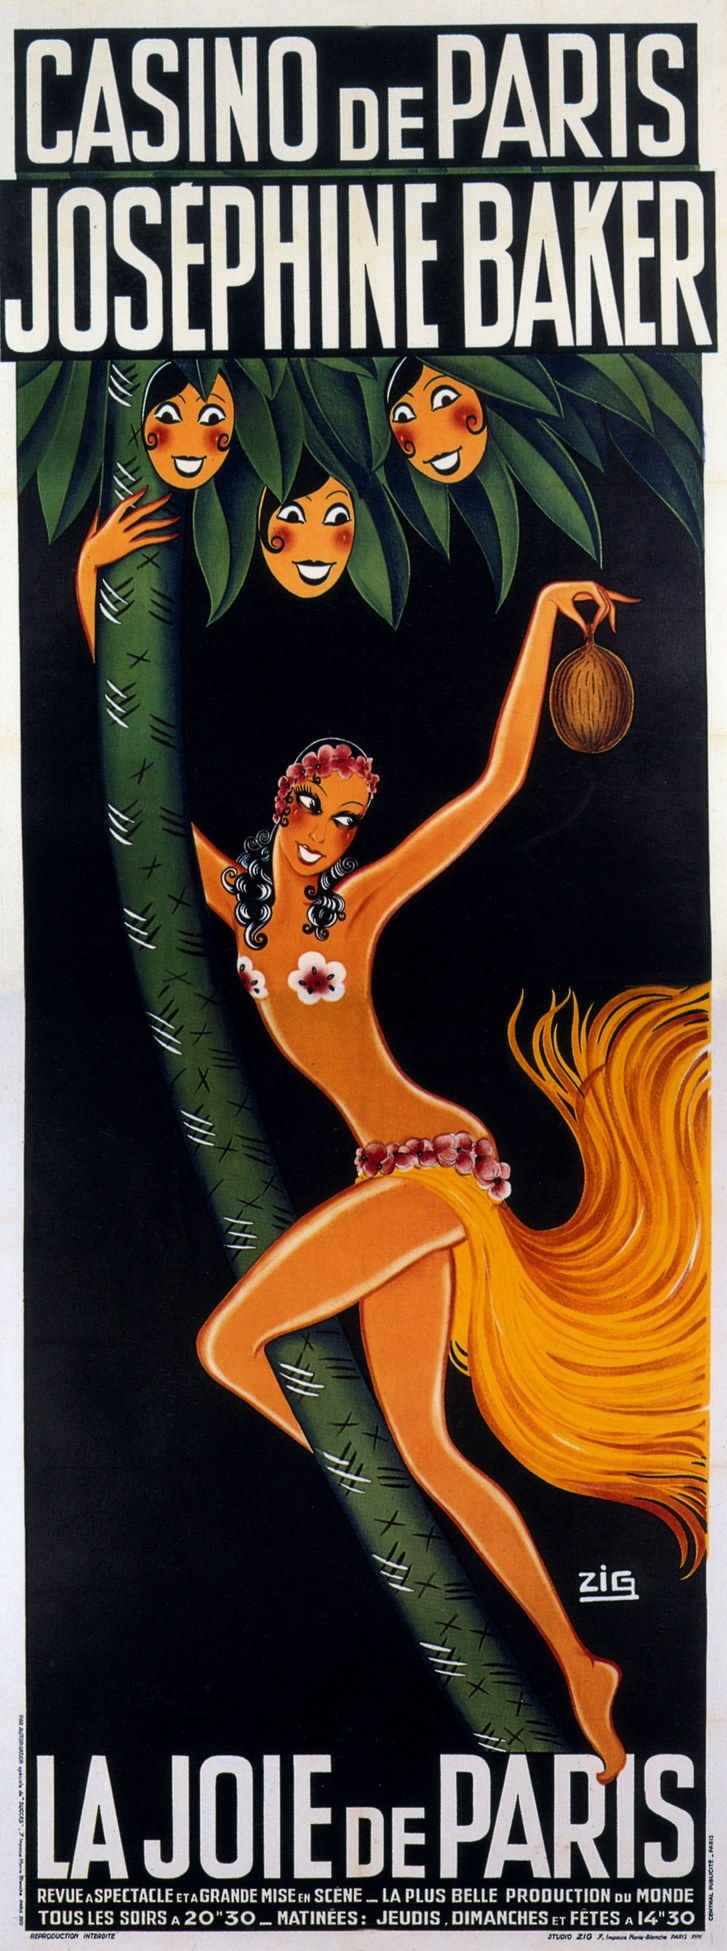 Affisch by Zig for show La joie de Paris with Josephine Baker 1930